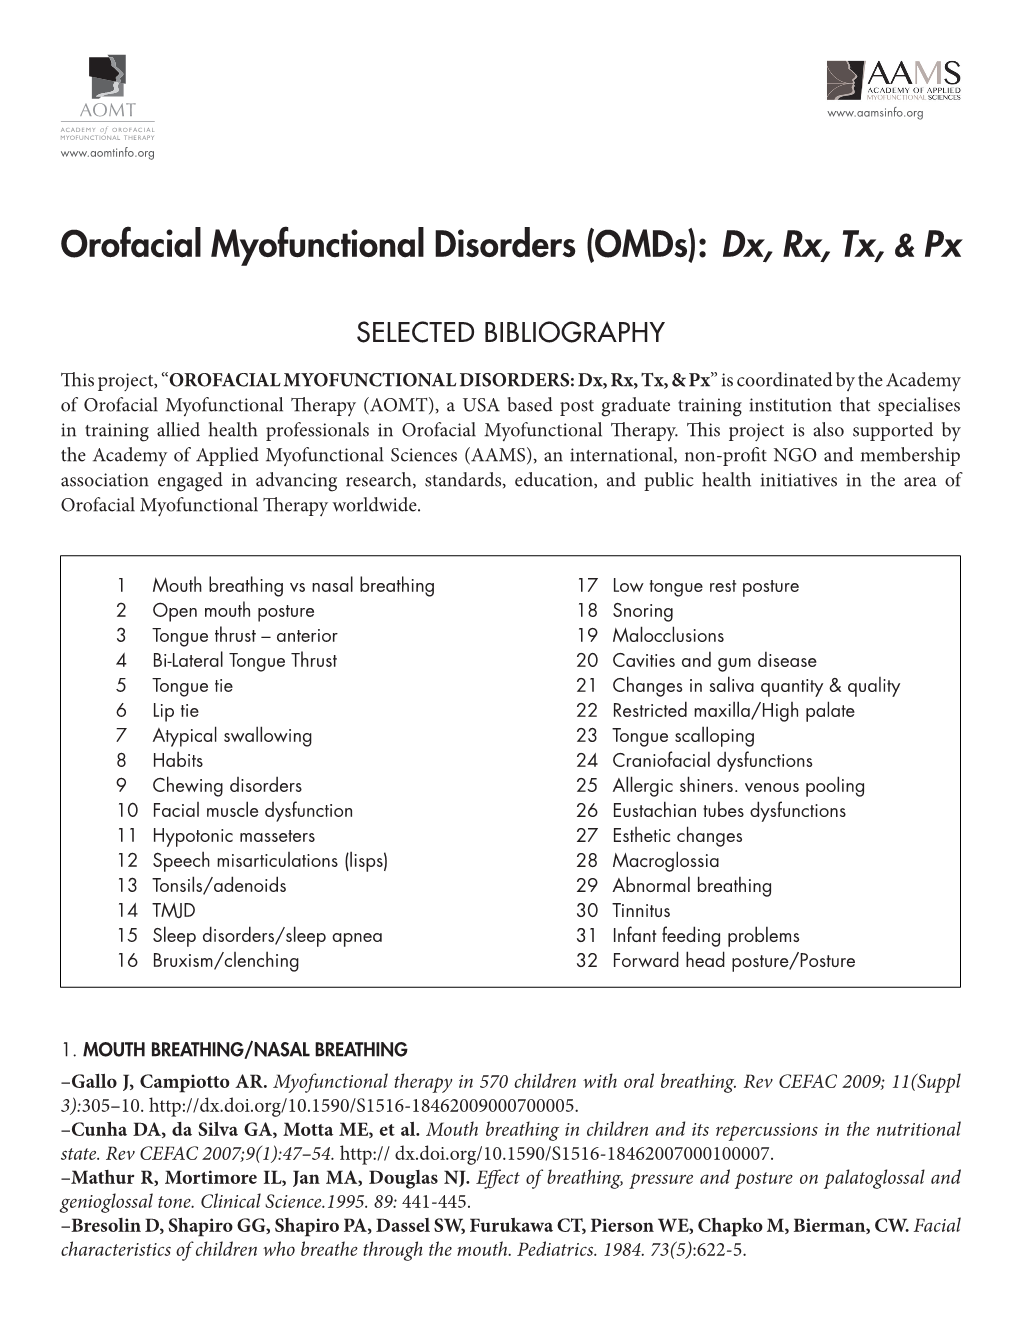 Orofacial Myofunctional Disorders (Omds): Dx, Rx, Tx, & Px